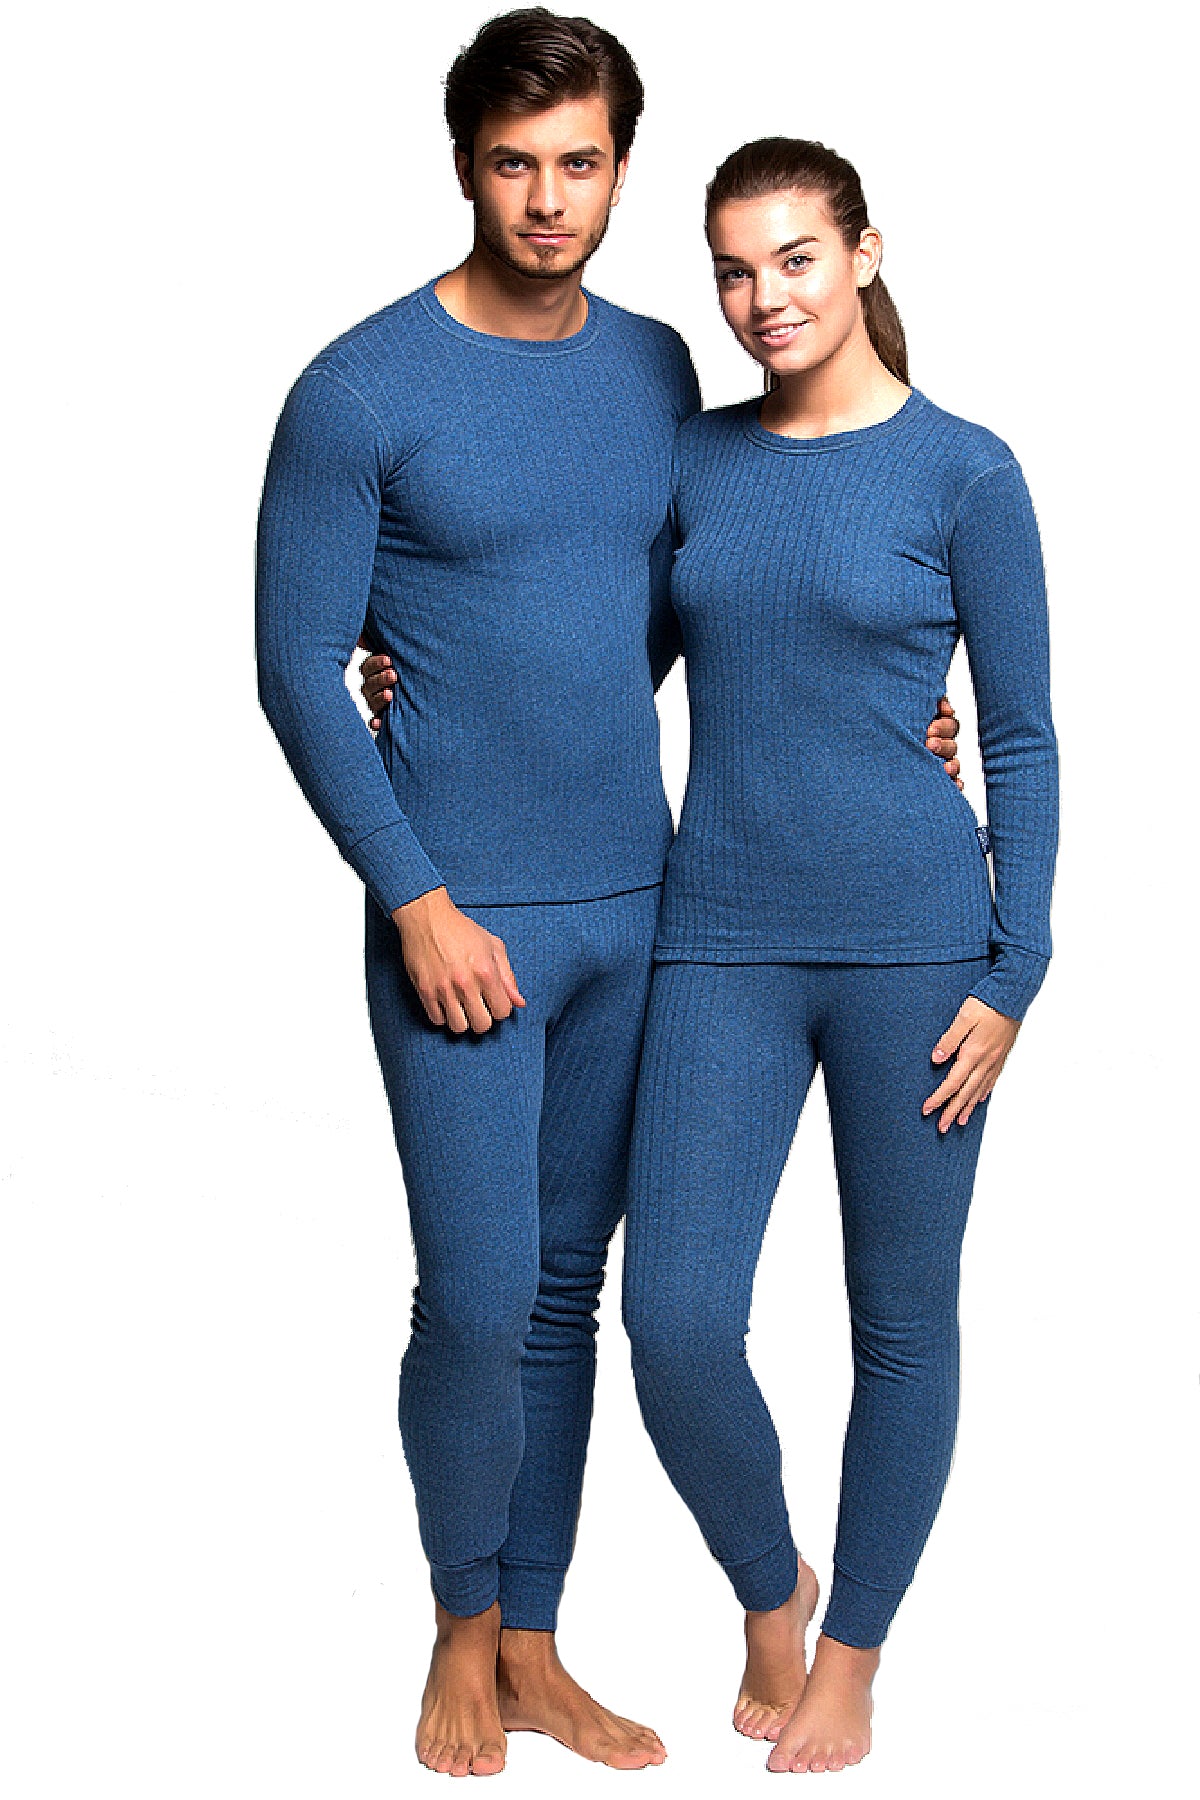 Wholesale Thermal Underwear Unisex Sets for Men & Women Soft Fleece Style - Blue